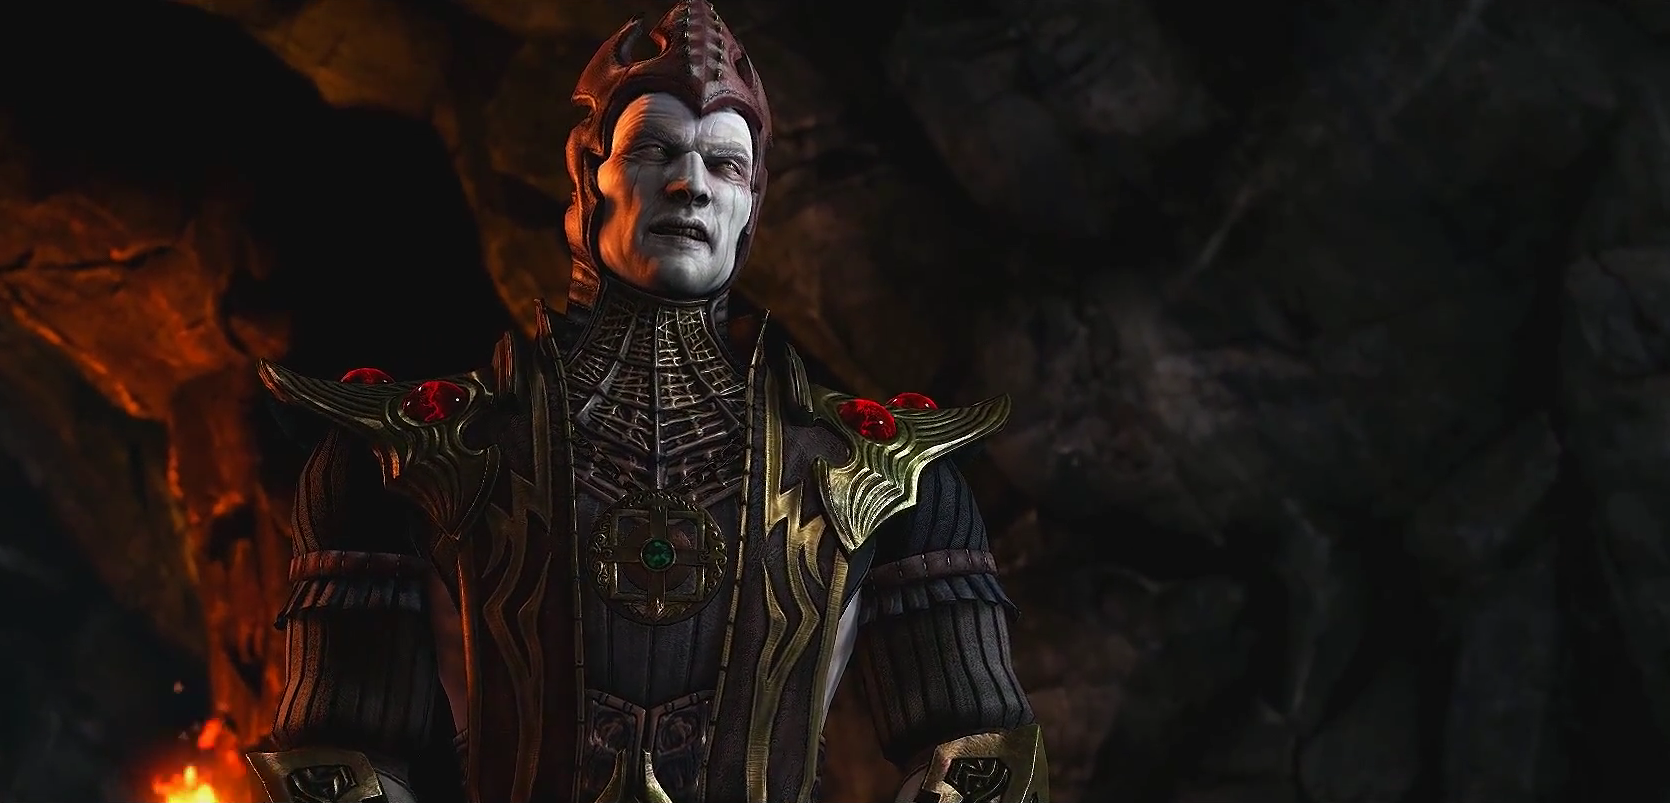 Dari Perubahan Status Hingga Nama yang Unik, Ini Beberapa Fakta Shinnok Mortal Kombat!